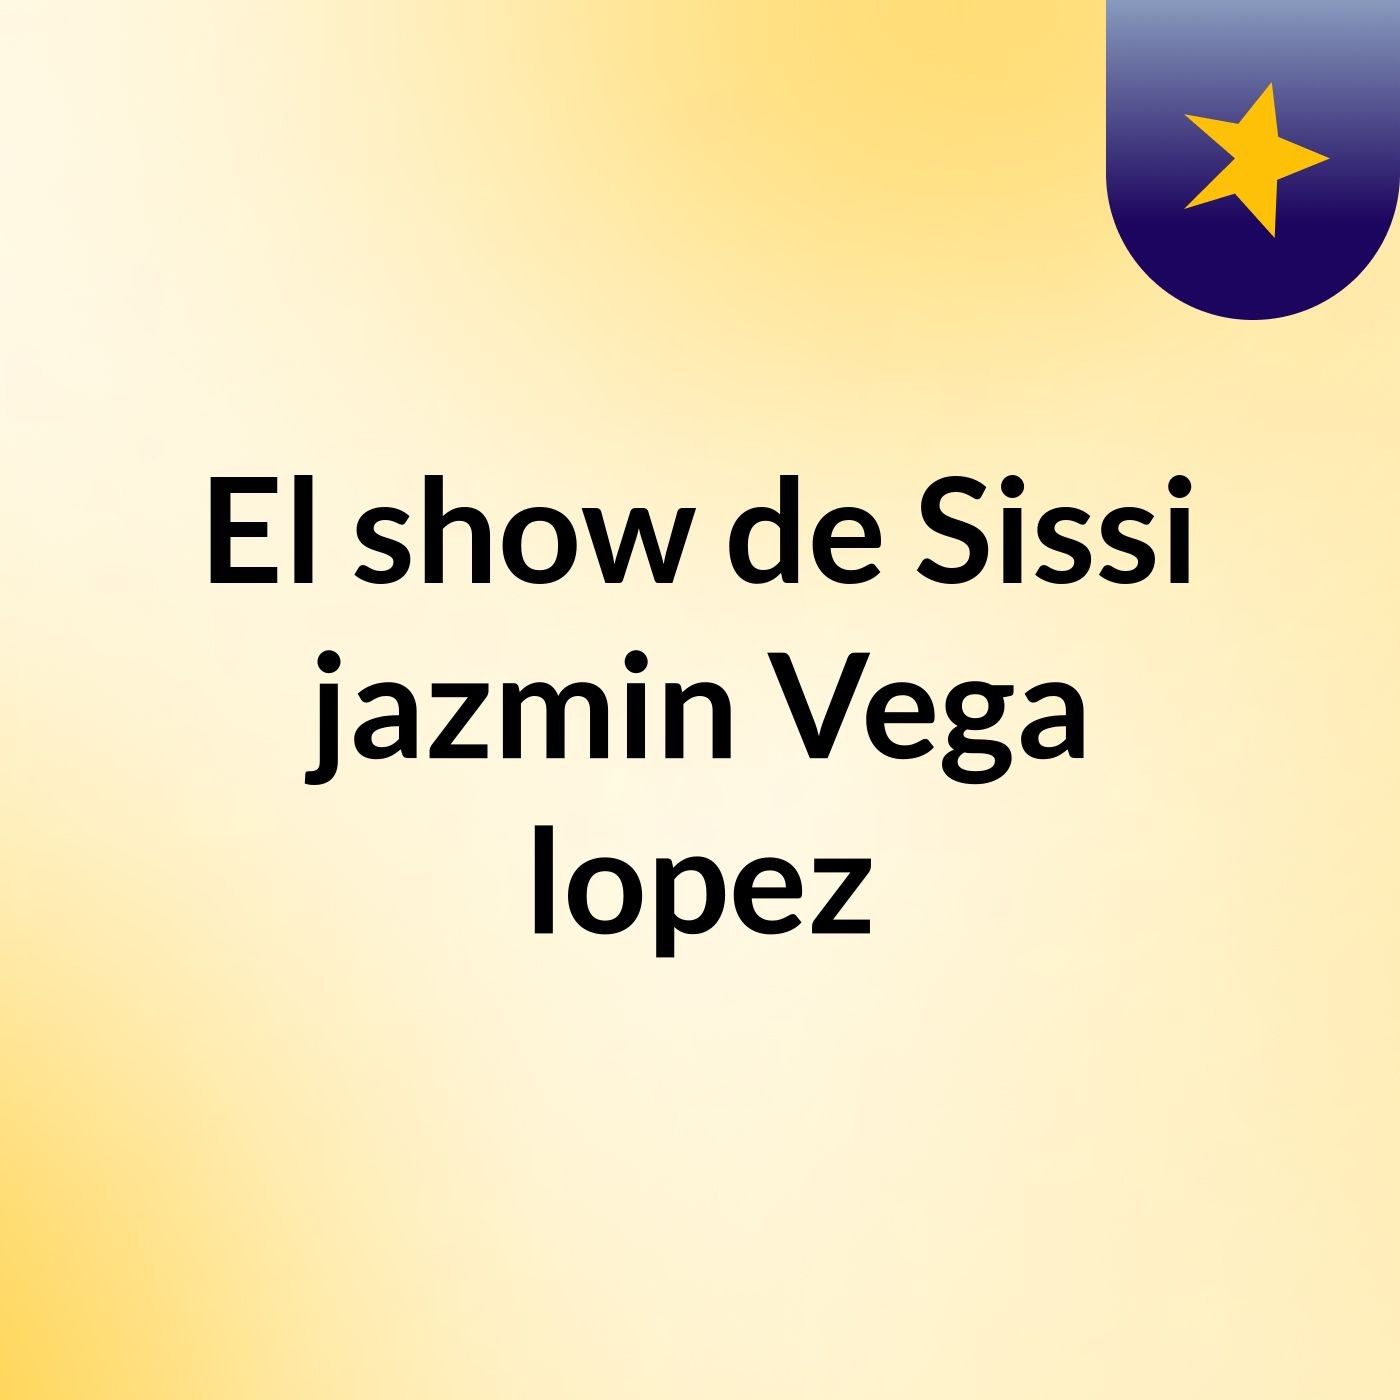 El show de Sissi jazmin Vega lopez